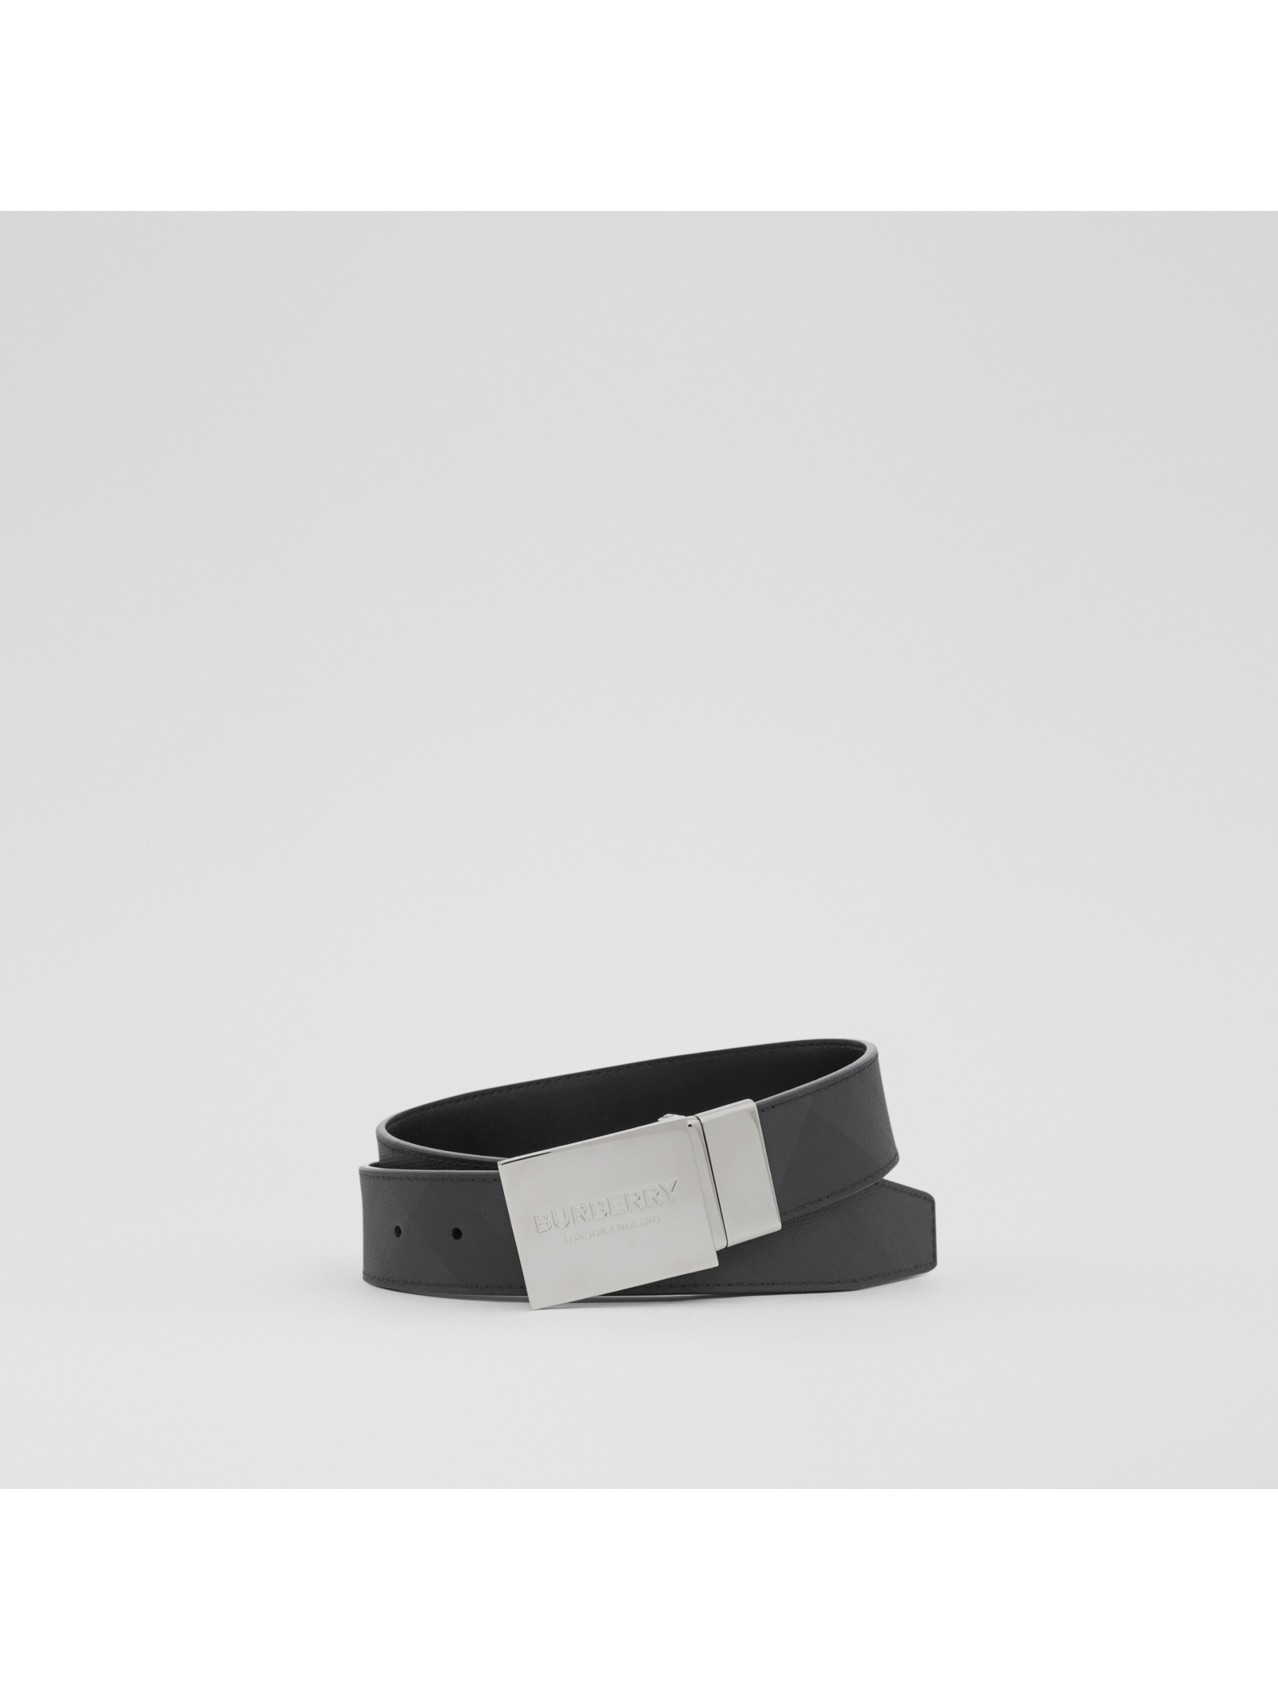 Men’s Belts | Leather & Reversible | Burberry